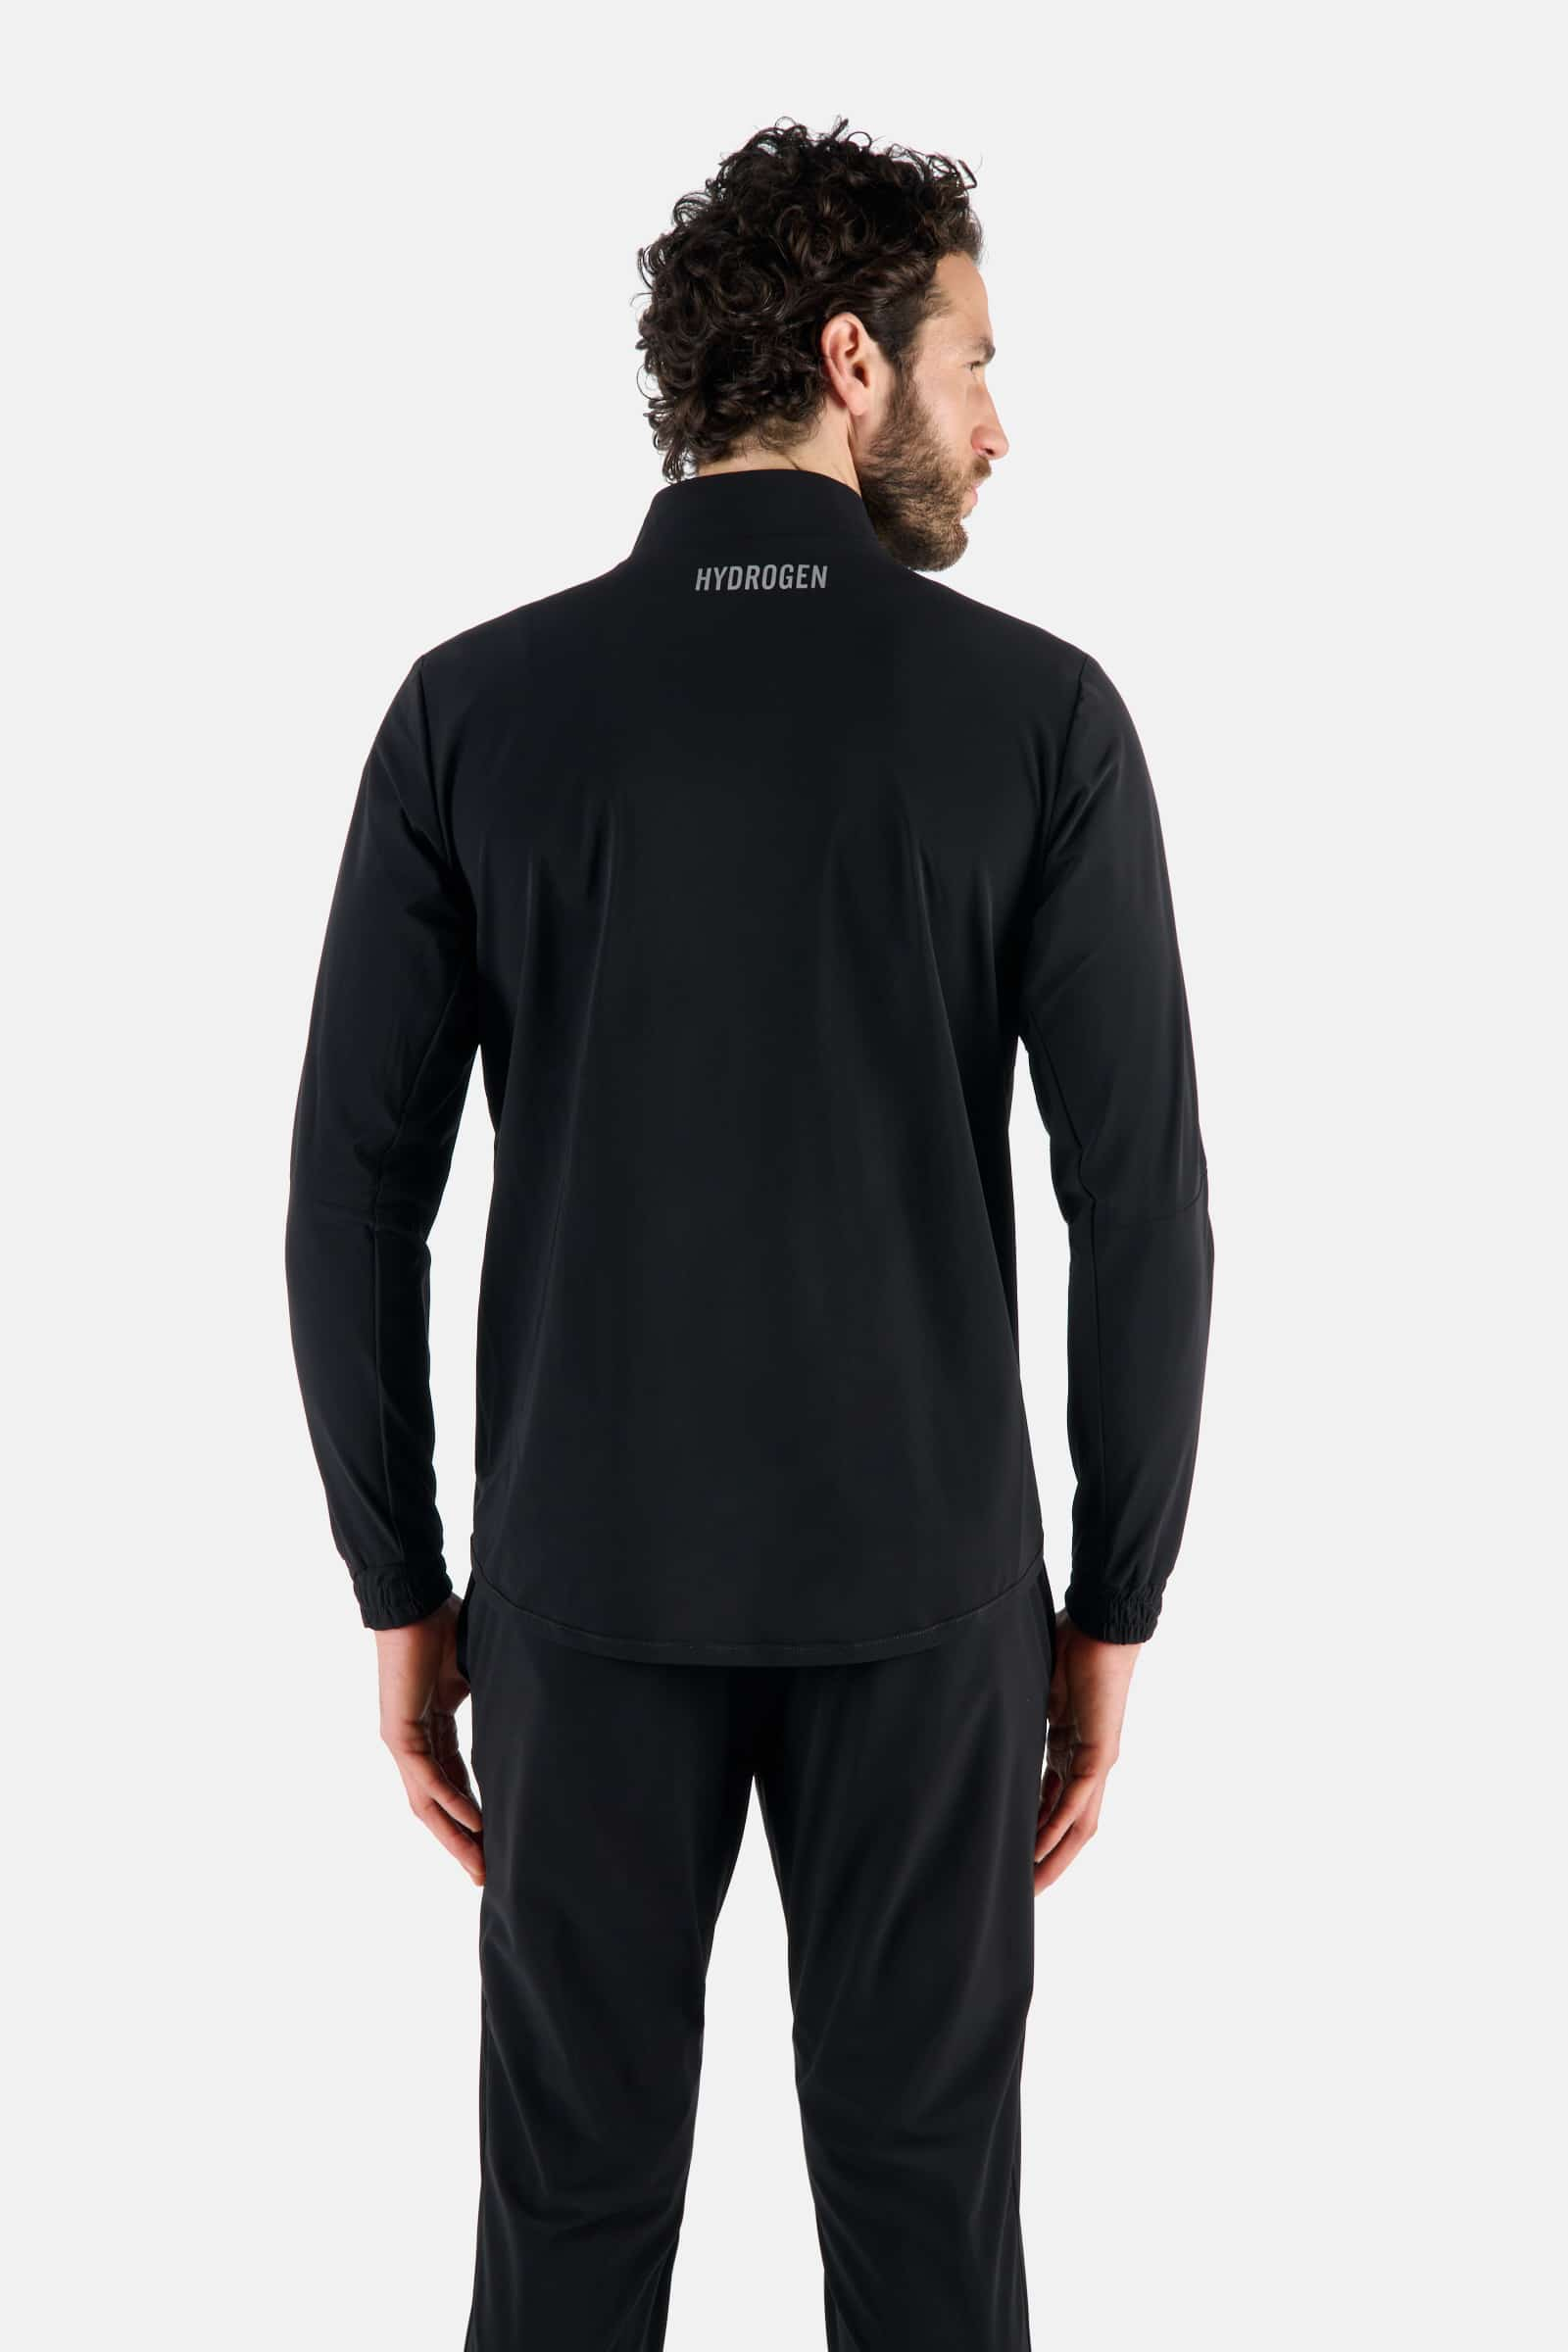 GOLF JKT - BLACK - Abbigliamento sportivo | Hydrogen